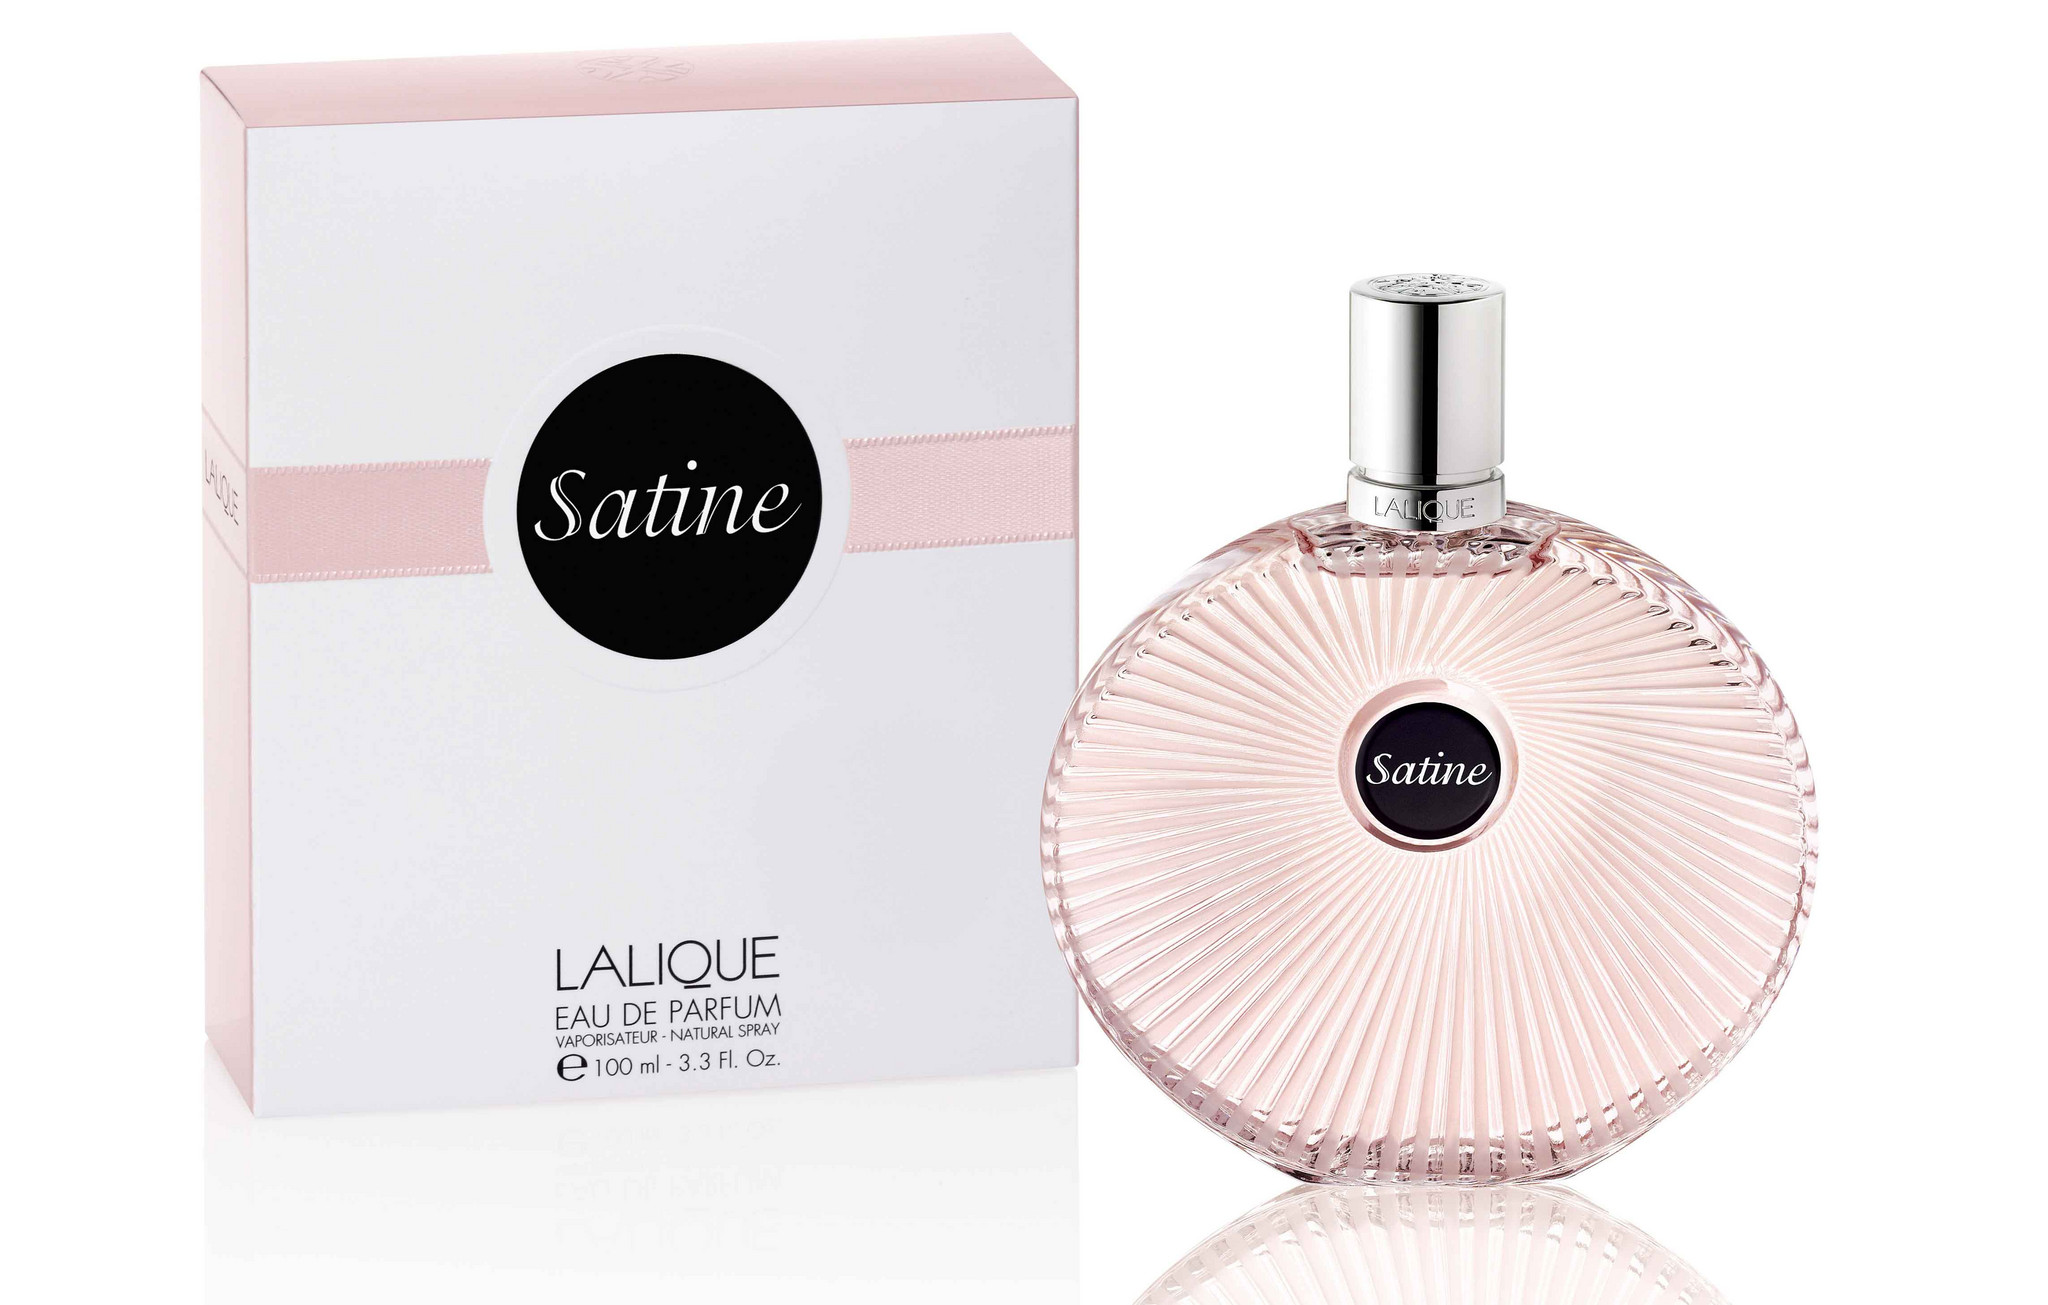 Satine-Eau-de-Parfum-100-ml-Flacon-&-Box-300-dpi.jpg